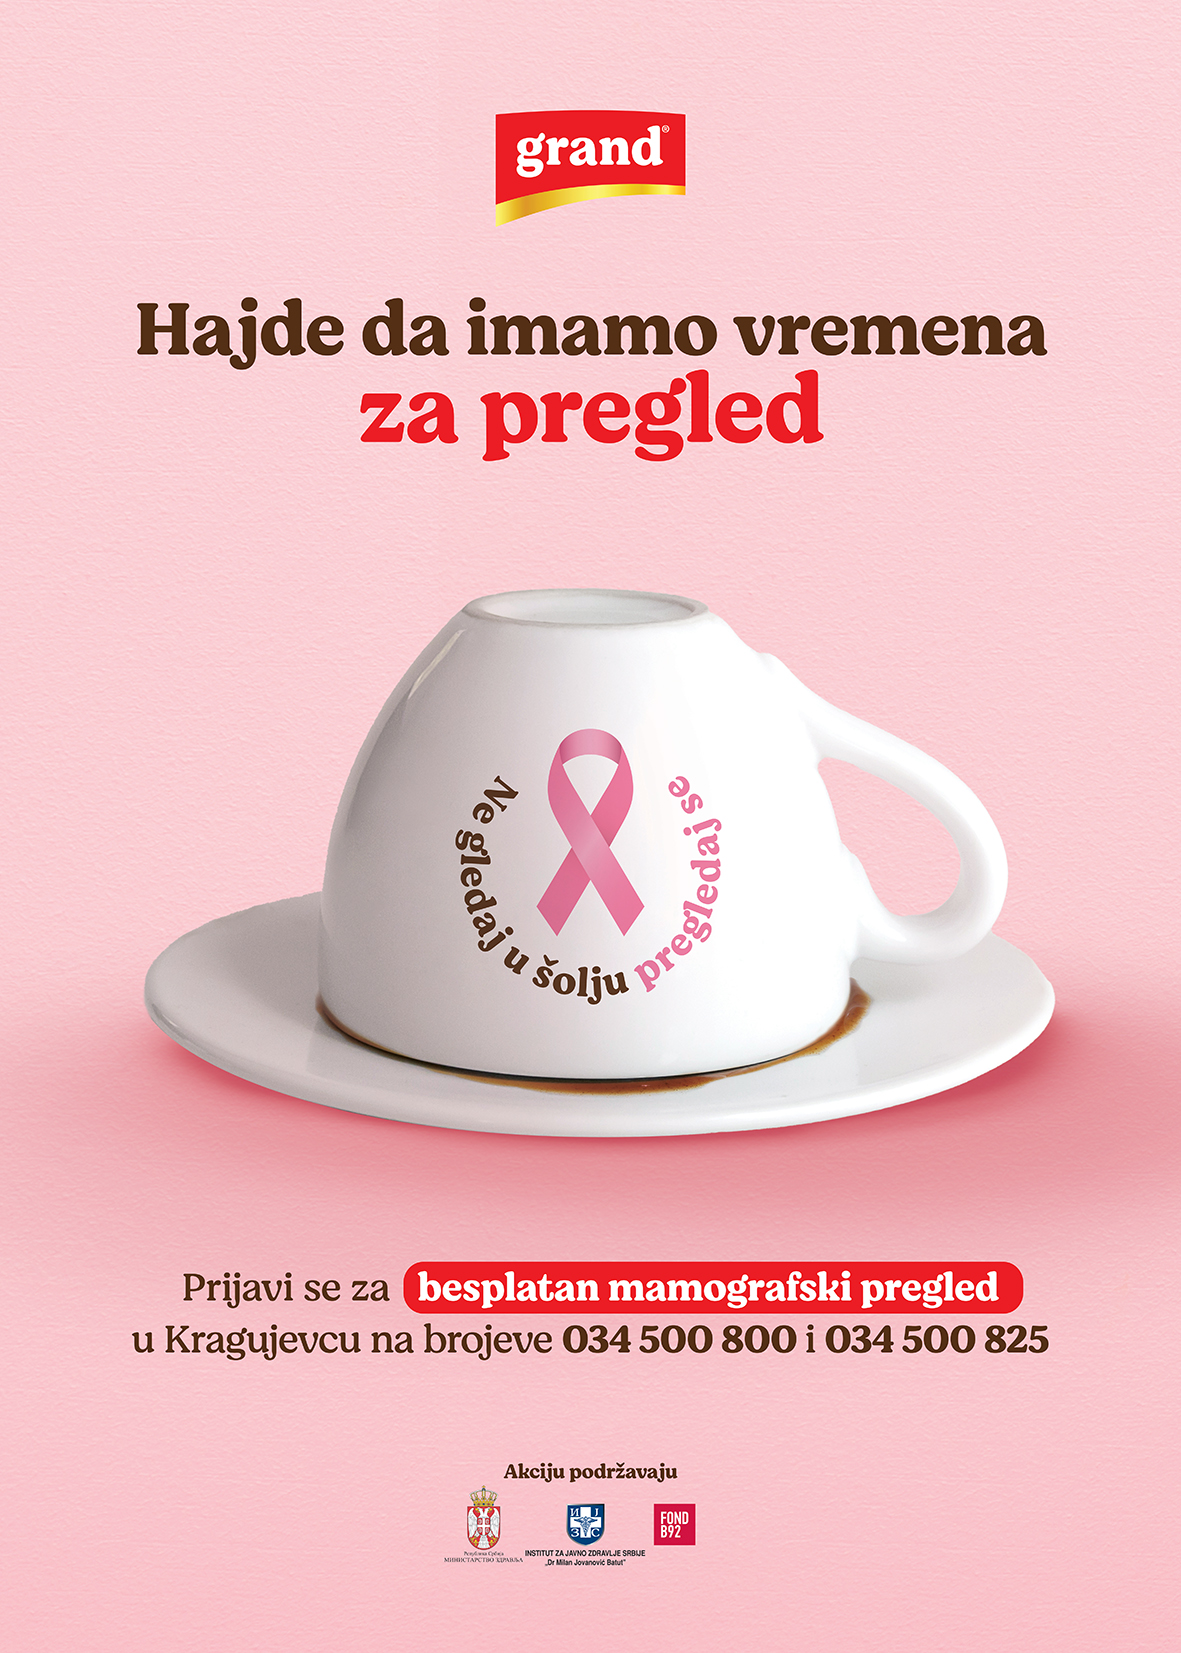 Mobilni mamograf u Kragujevcu